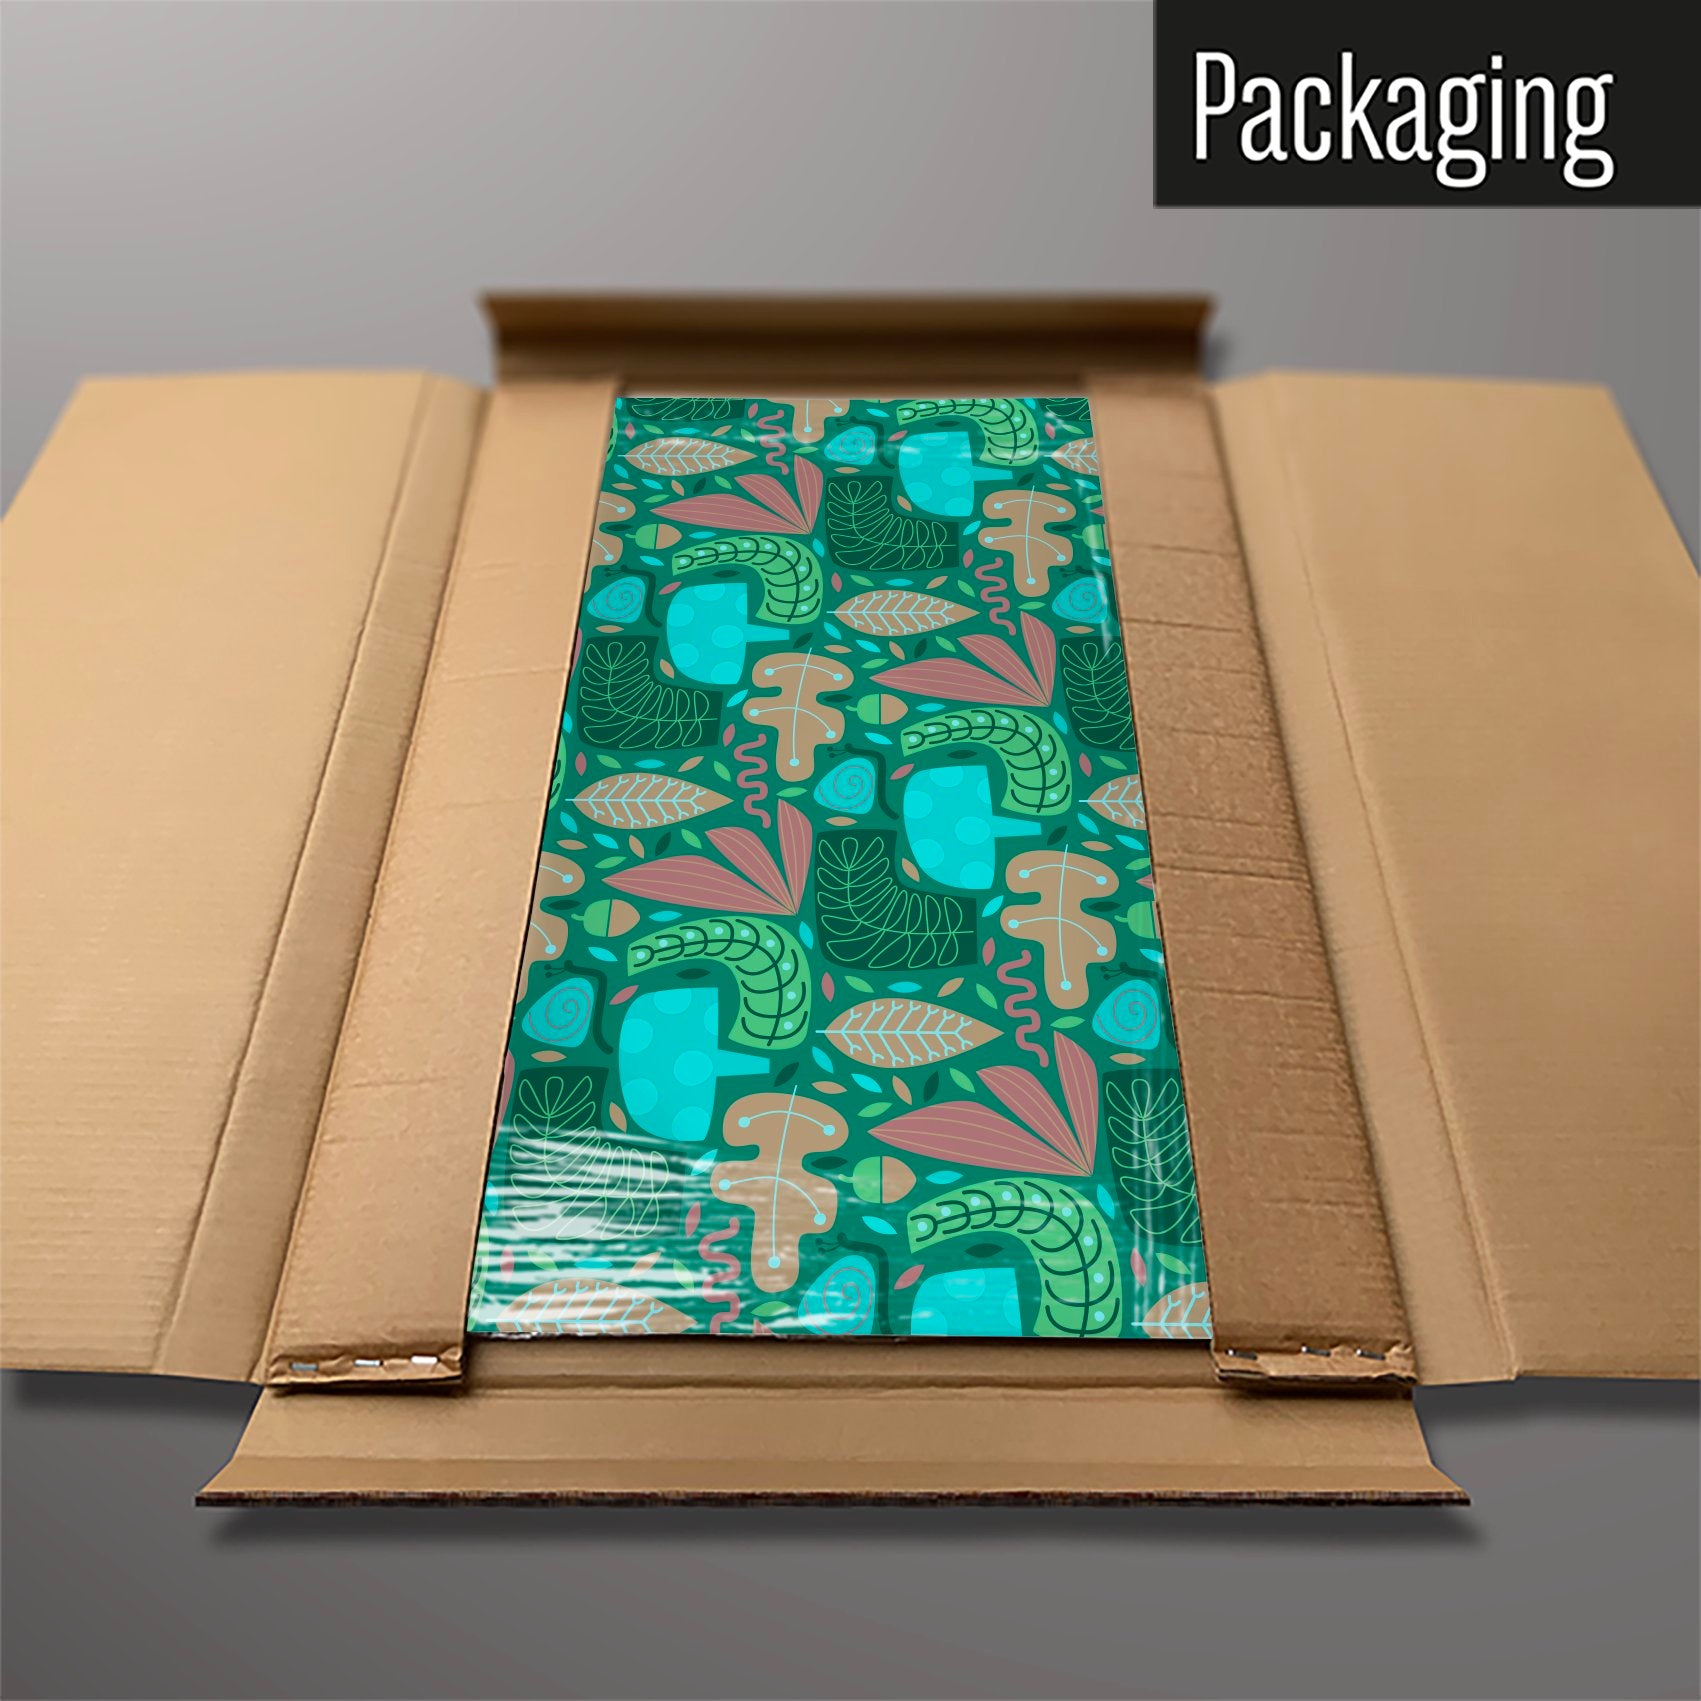 A first floor design magnetic board in it’s cardboard packaging